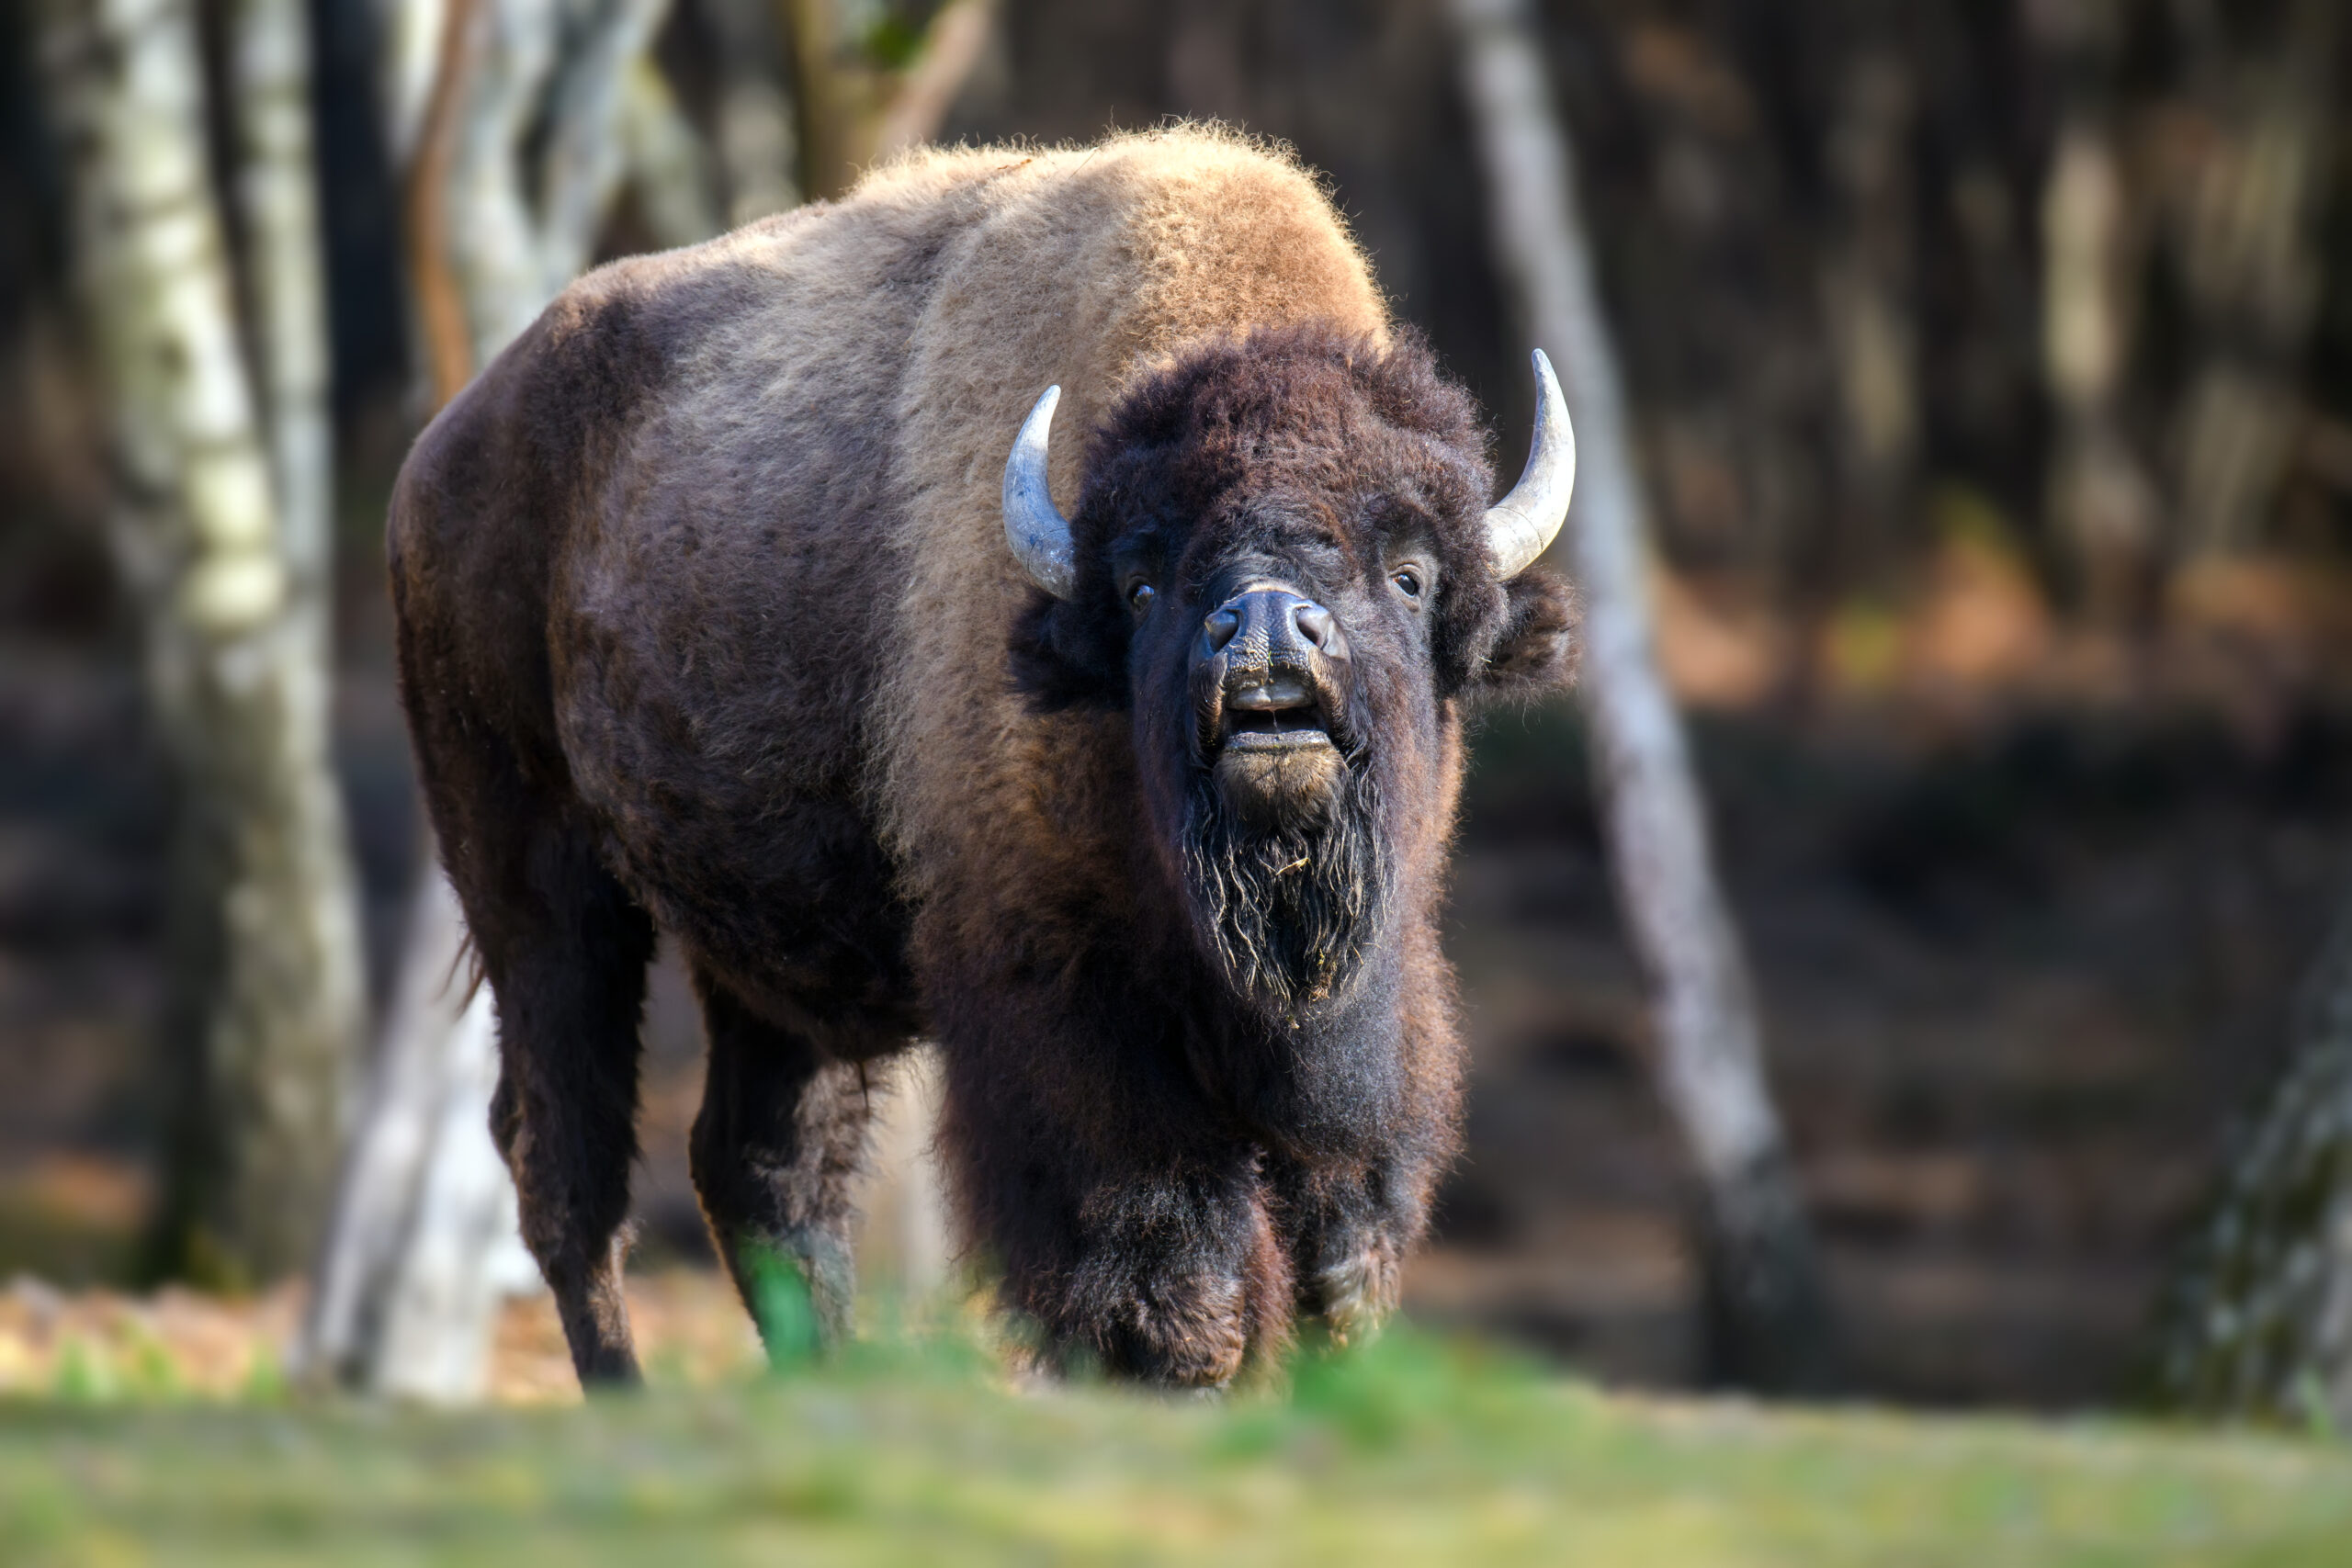 wild adult bison in the autumn forest wildlife sc 2021 12 09 02 20 55 utc scaled